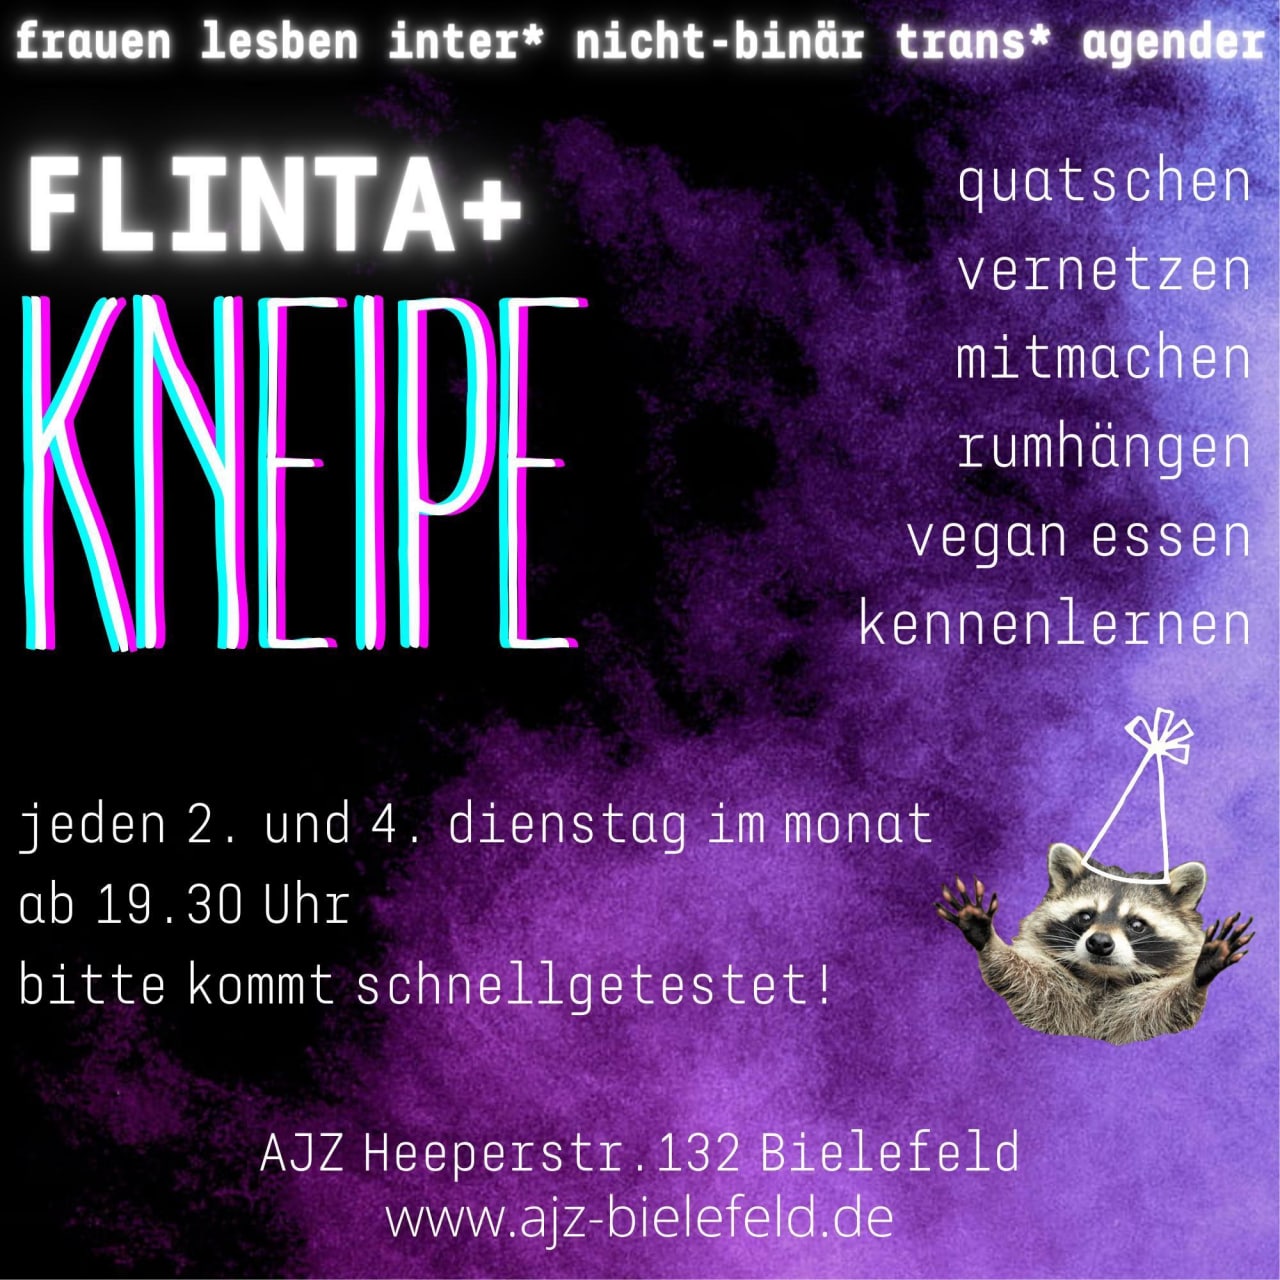 FLINTA+ Kneipe